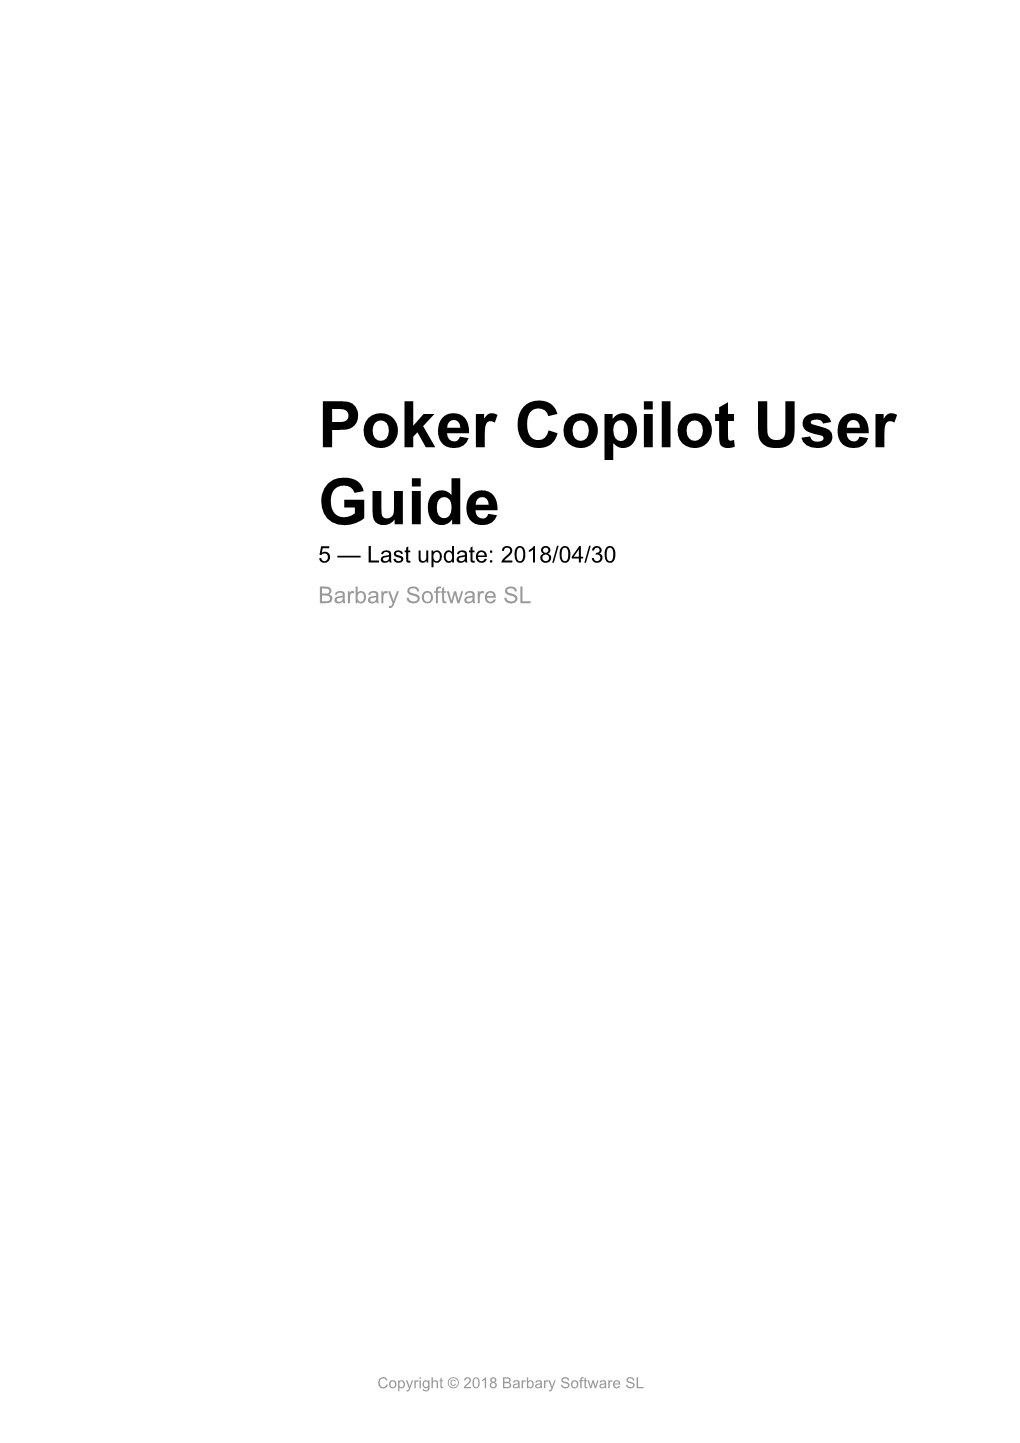 Poker Copilot User Guide 5 — Last Update: 2018/04/30 Barbary Software SL